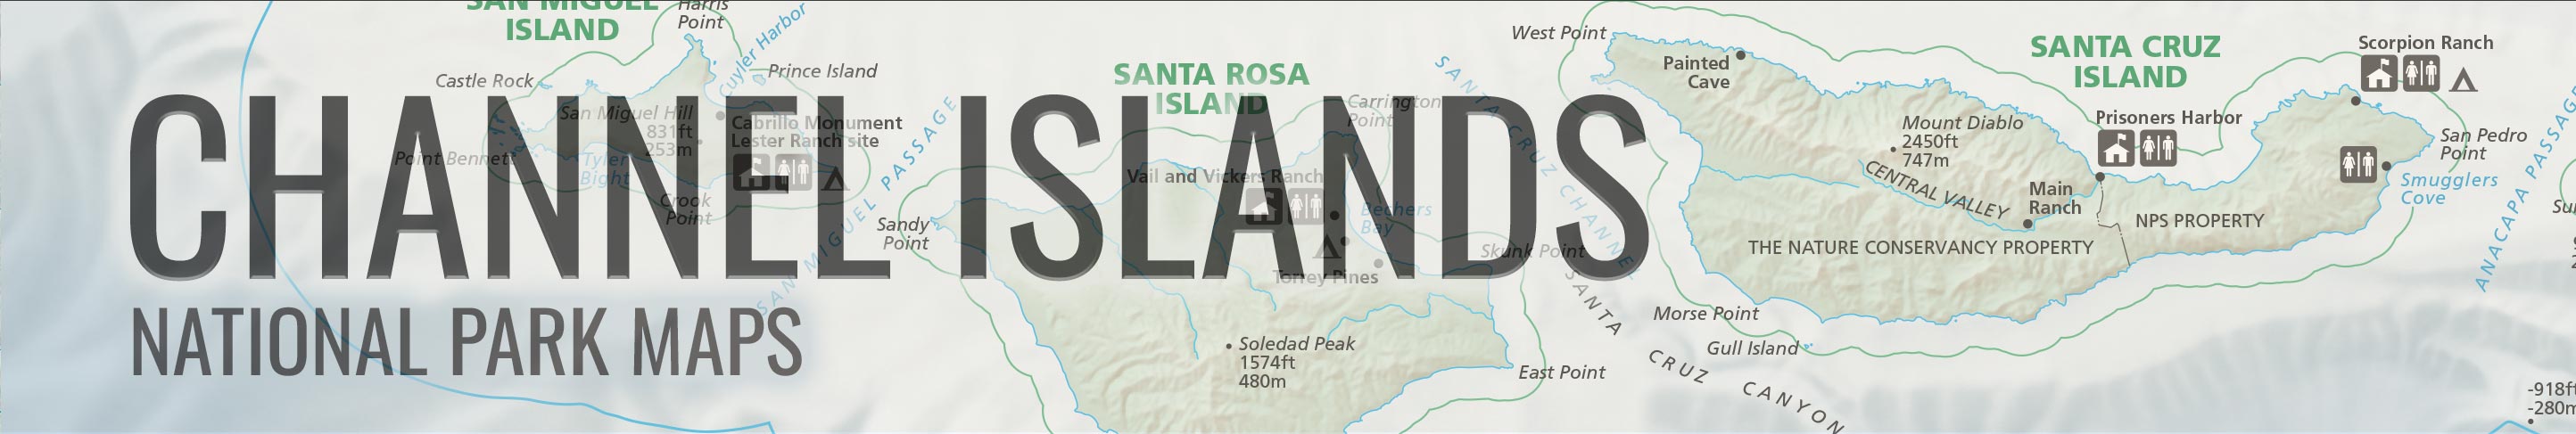 channel-islands-national-park-maps-header